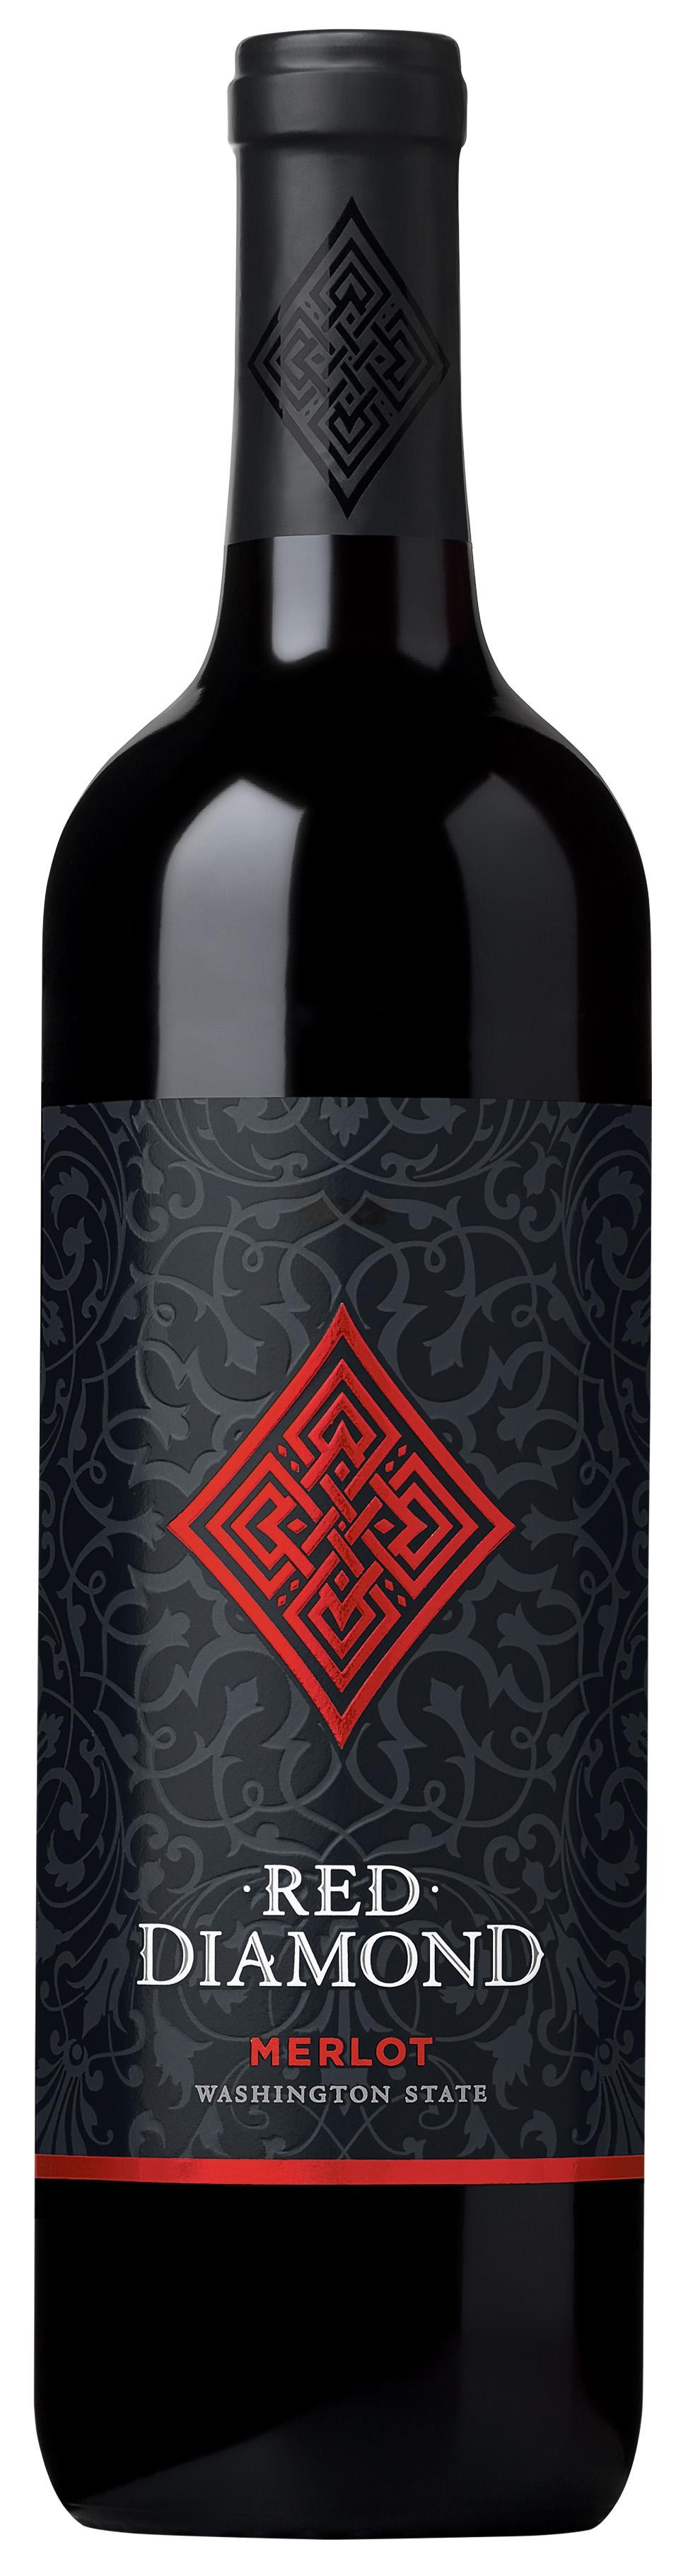 Red Diamond Merlot - Wine from Washington - 750ml Bottle